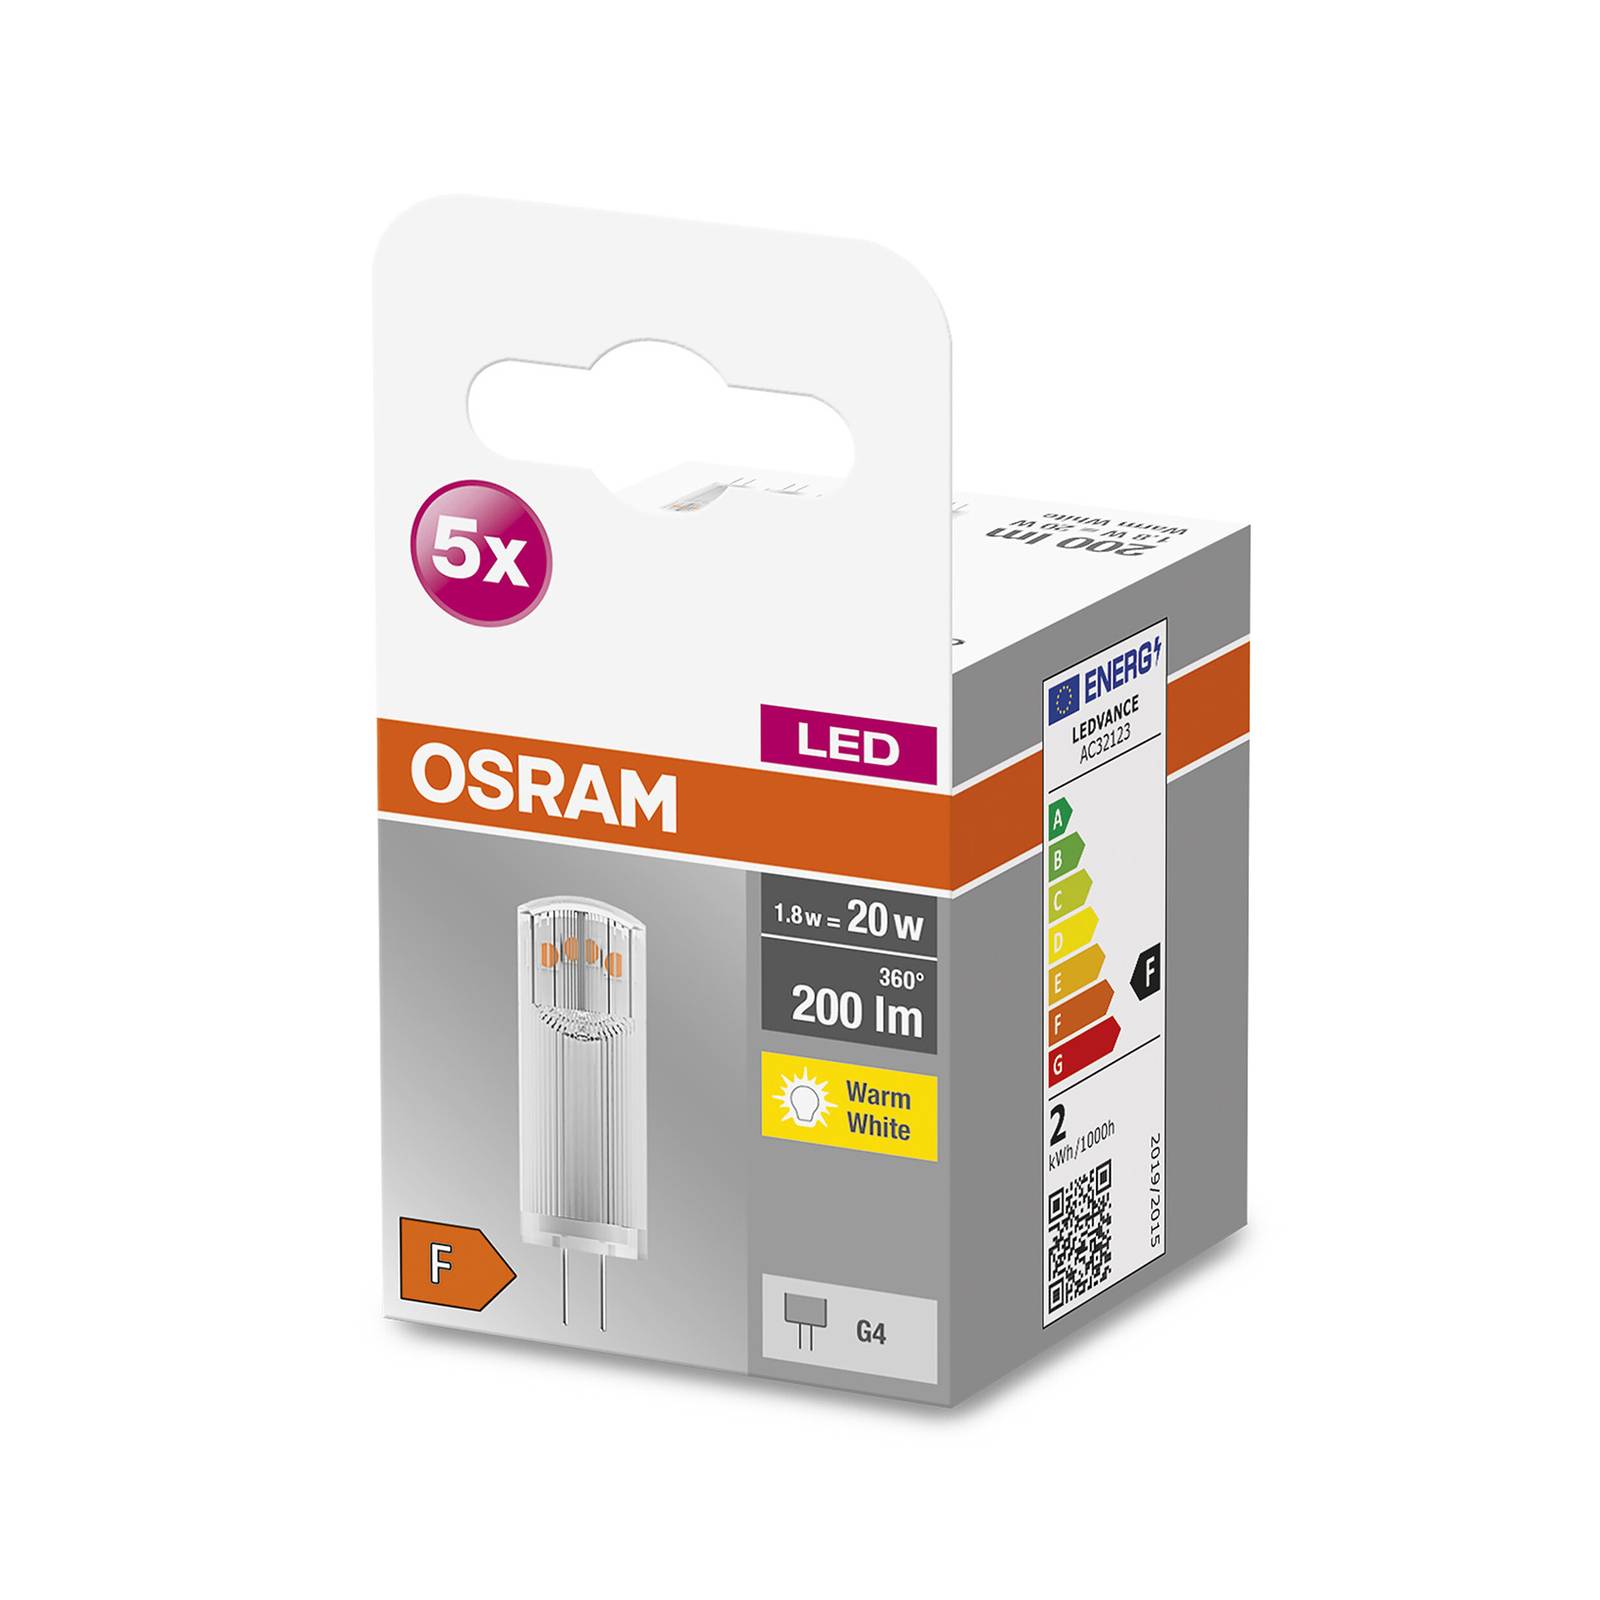 OSRAM Base PIN LED kapszula G4 1,8 W 200 lm 5-ös